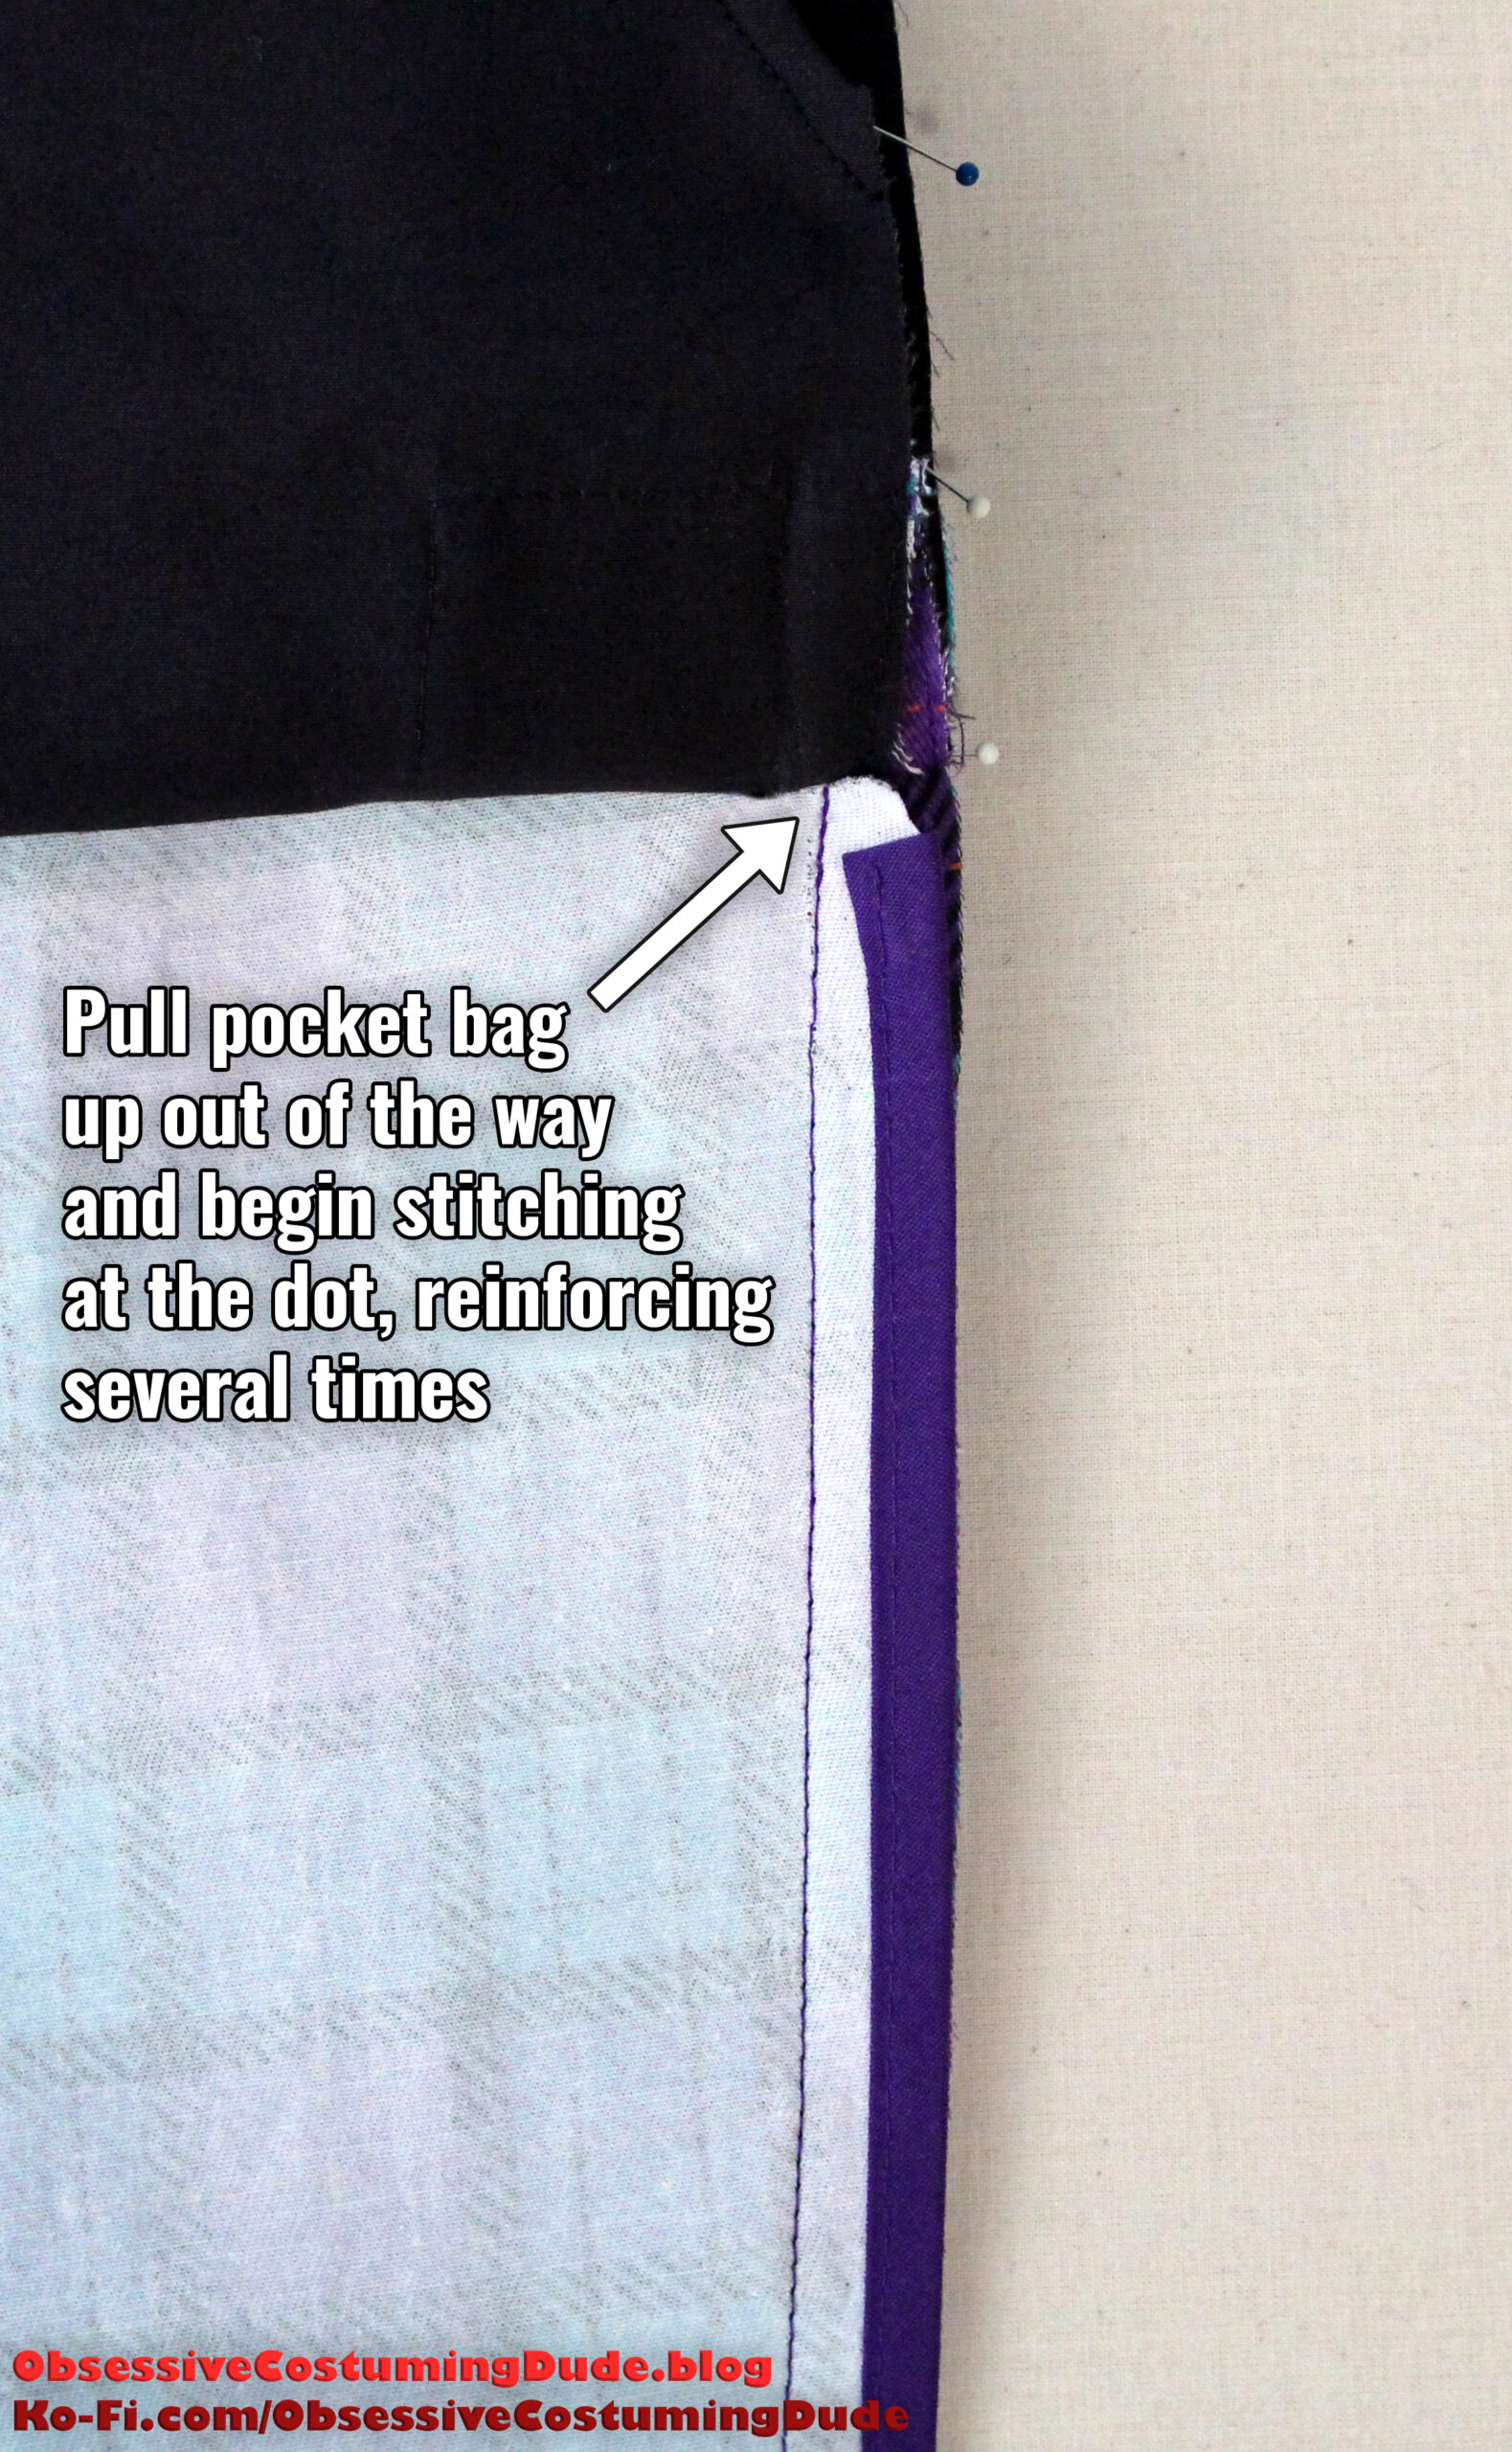 Joker trousers sewing tutorial - Obsessive Costuming Dude